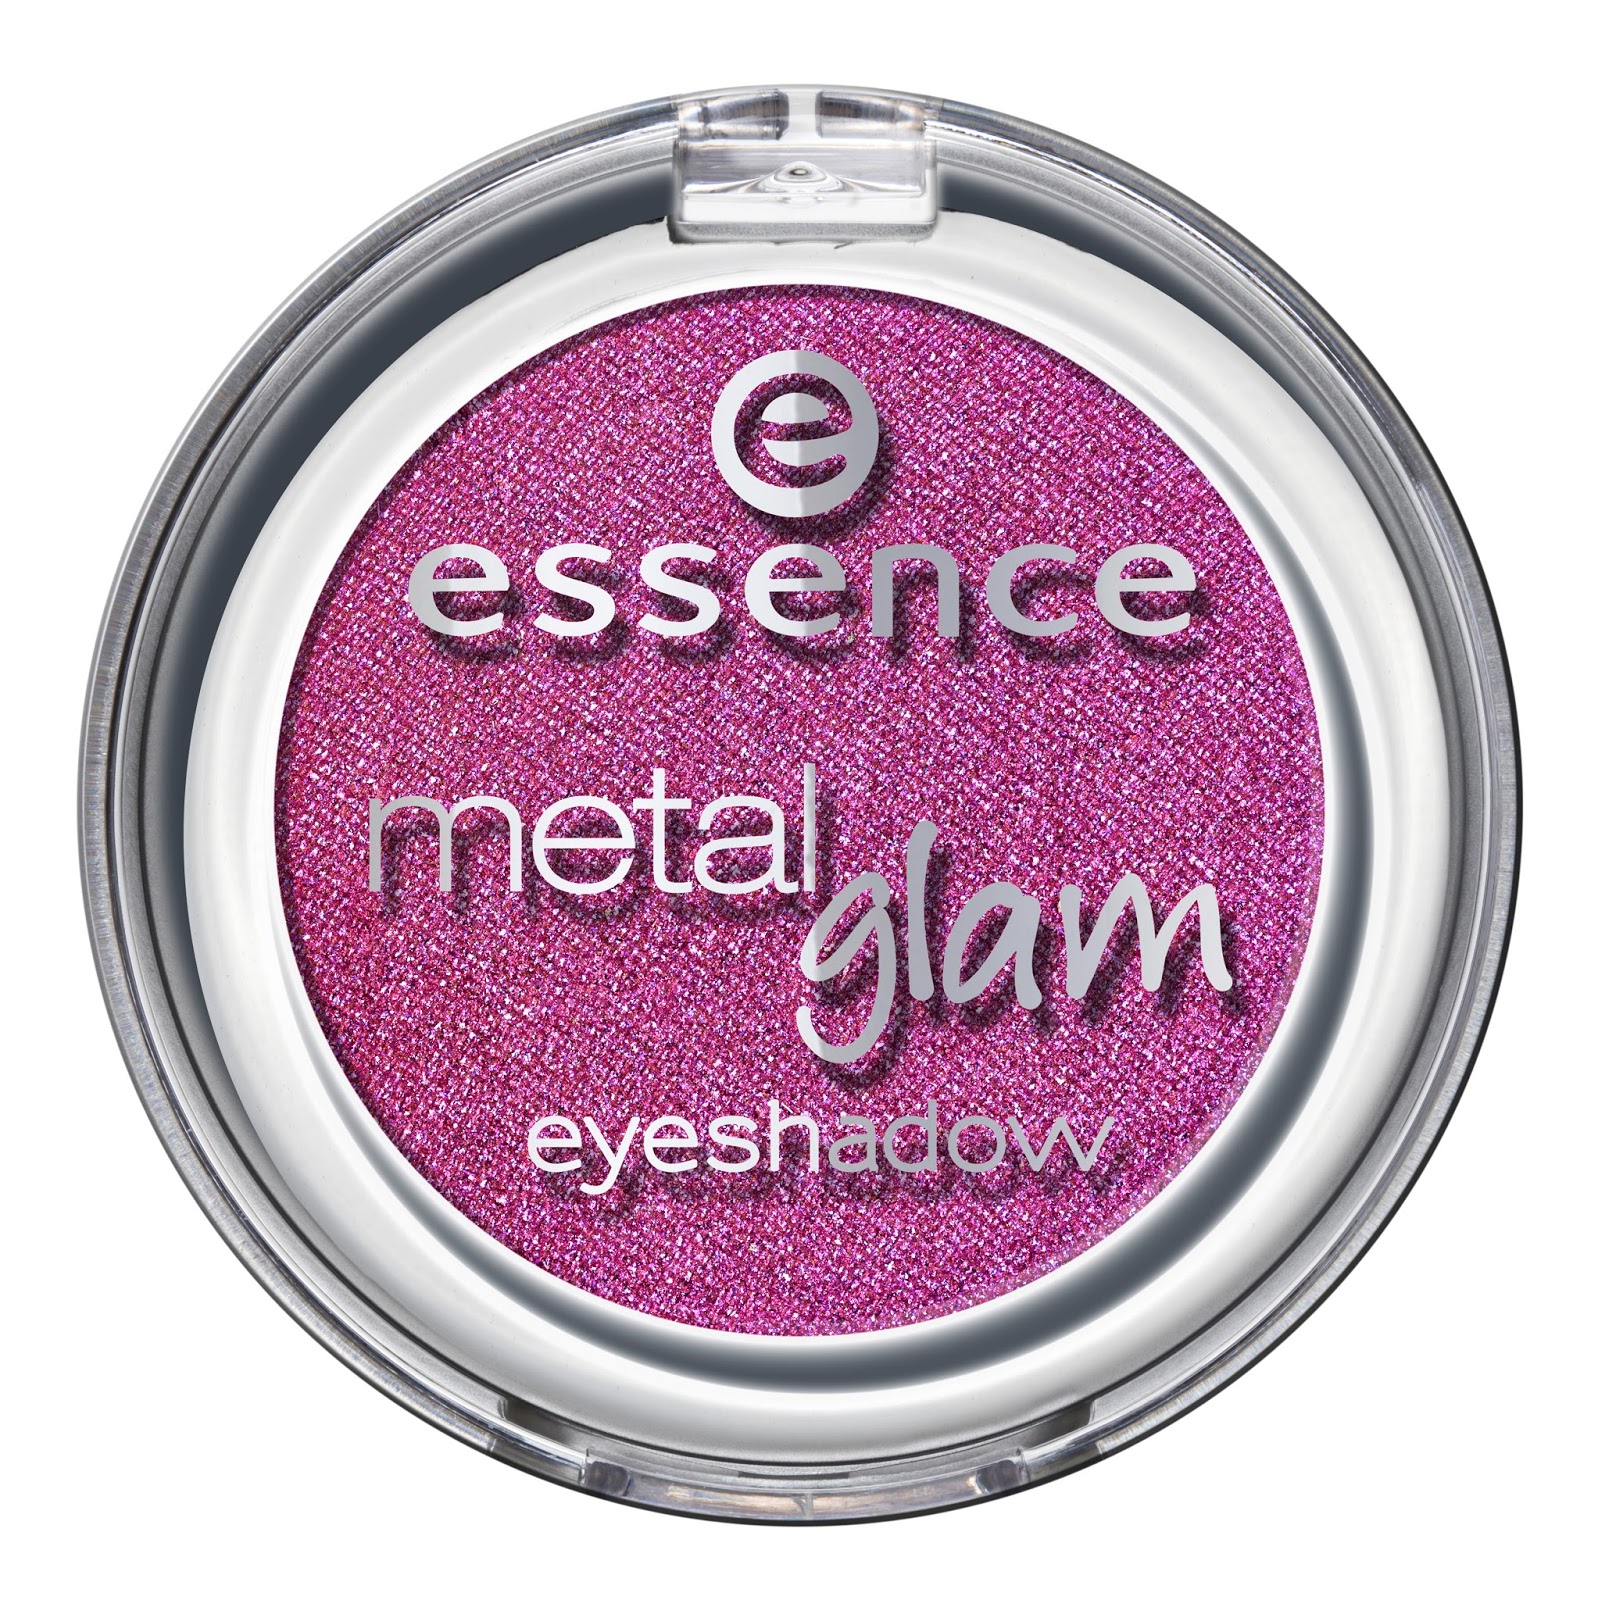 Essence metal glam eyeshadow